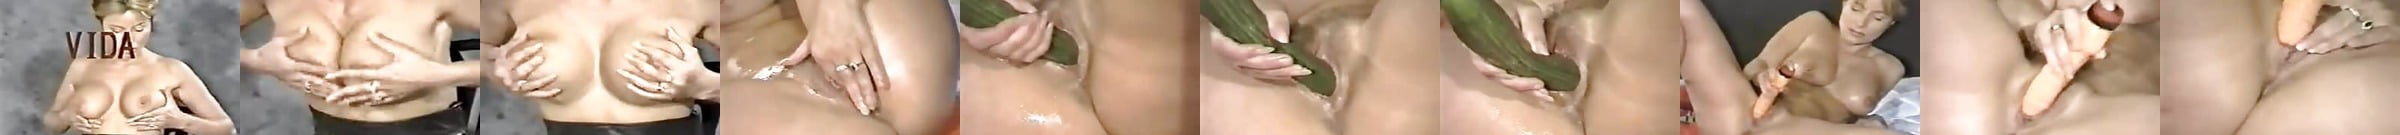 Victoria Coren Mitchell Stirring Of A Semi Free Hd Porn A1 Xhamster